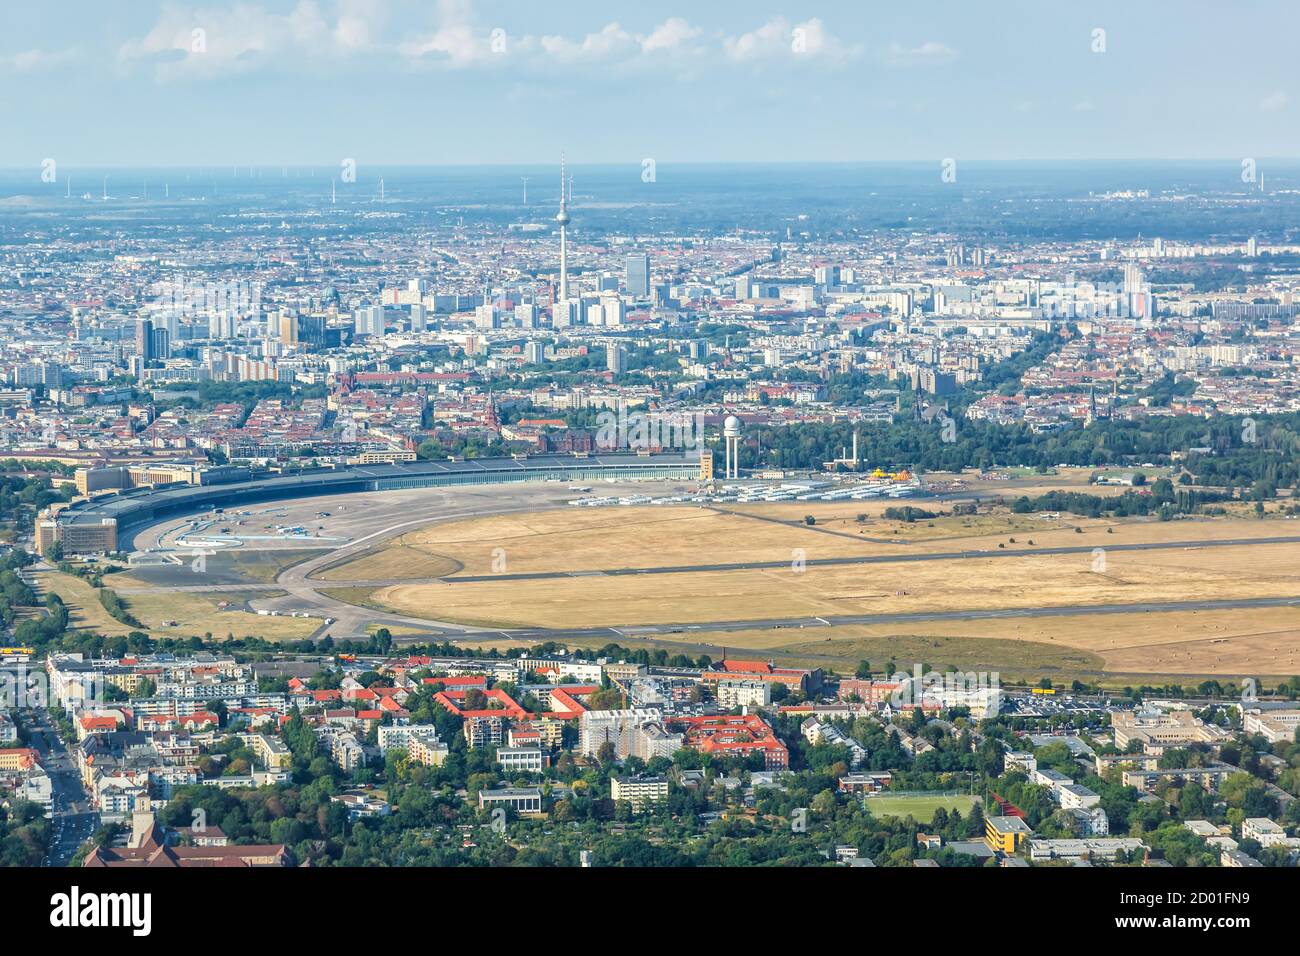 Berlin, Germany - August 19, 2020: Former Berlin Tempelhof Airport aerial view photo in Germany. Stock Photo